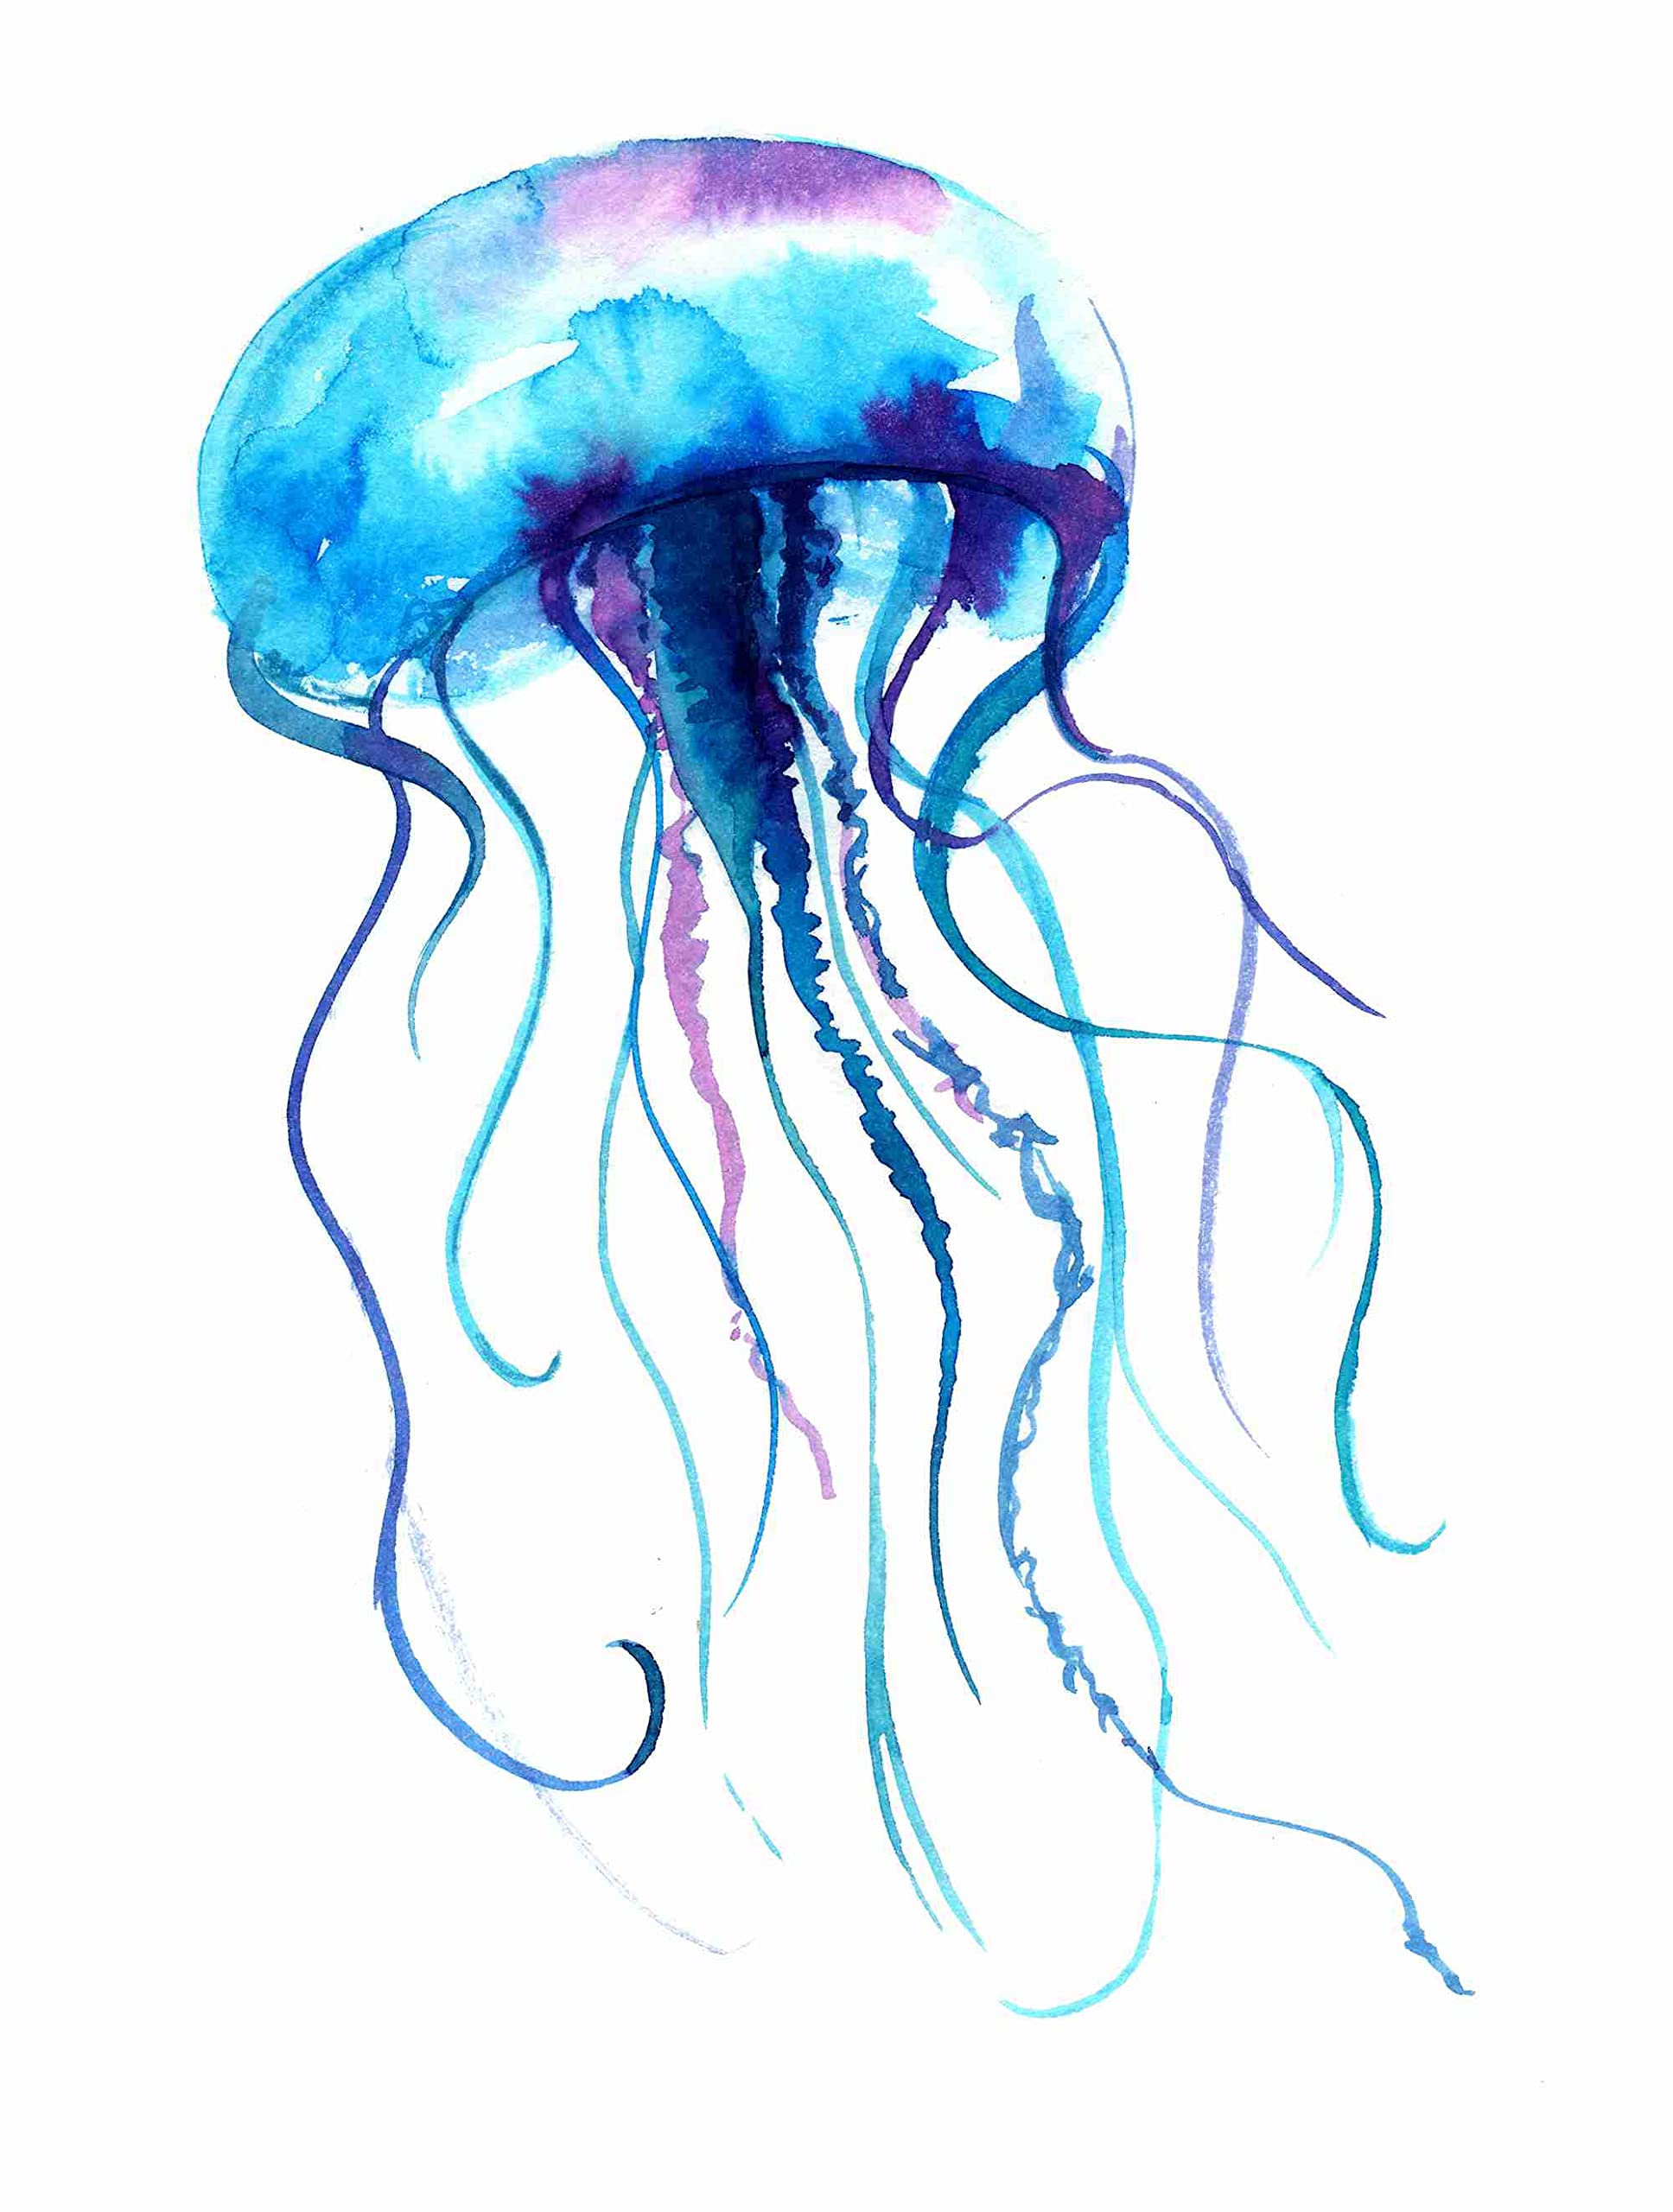 Jellyfish illustration Black and White Stock Photos & Images - Alamy